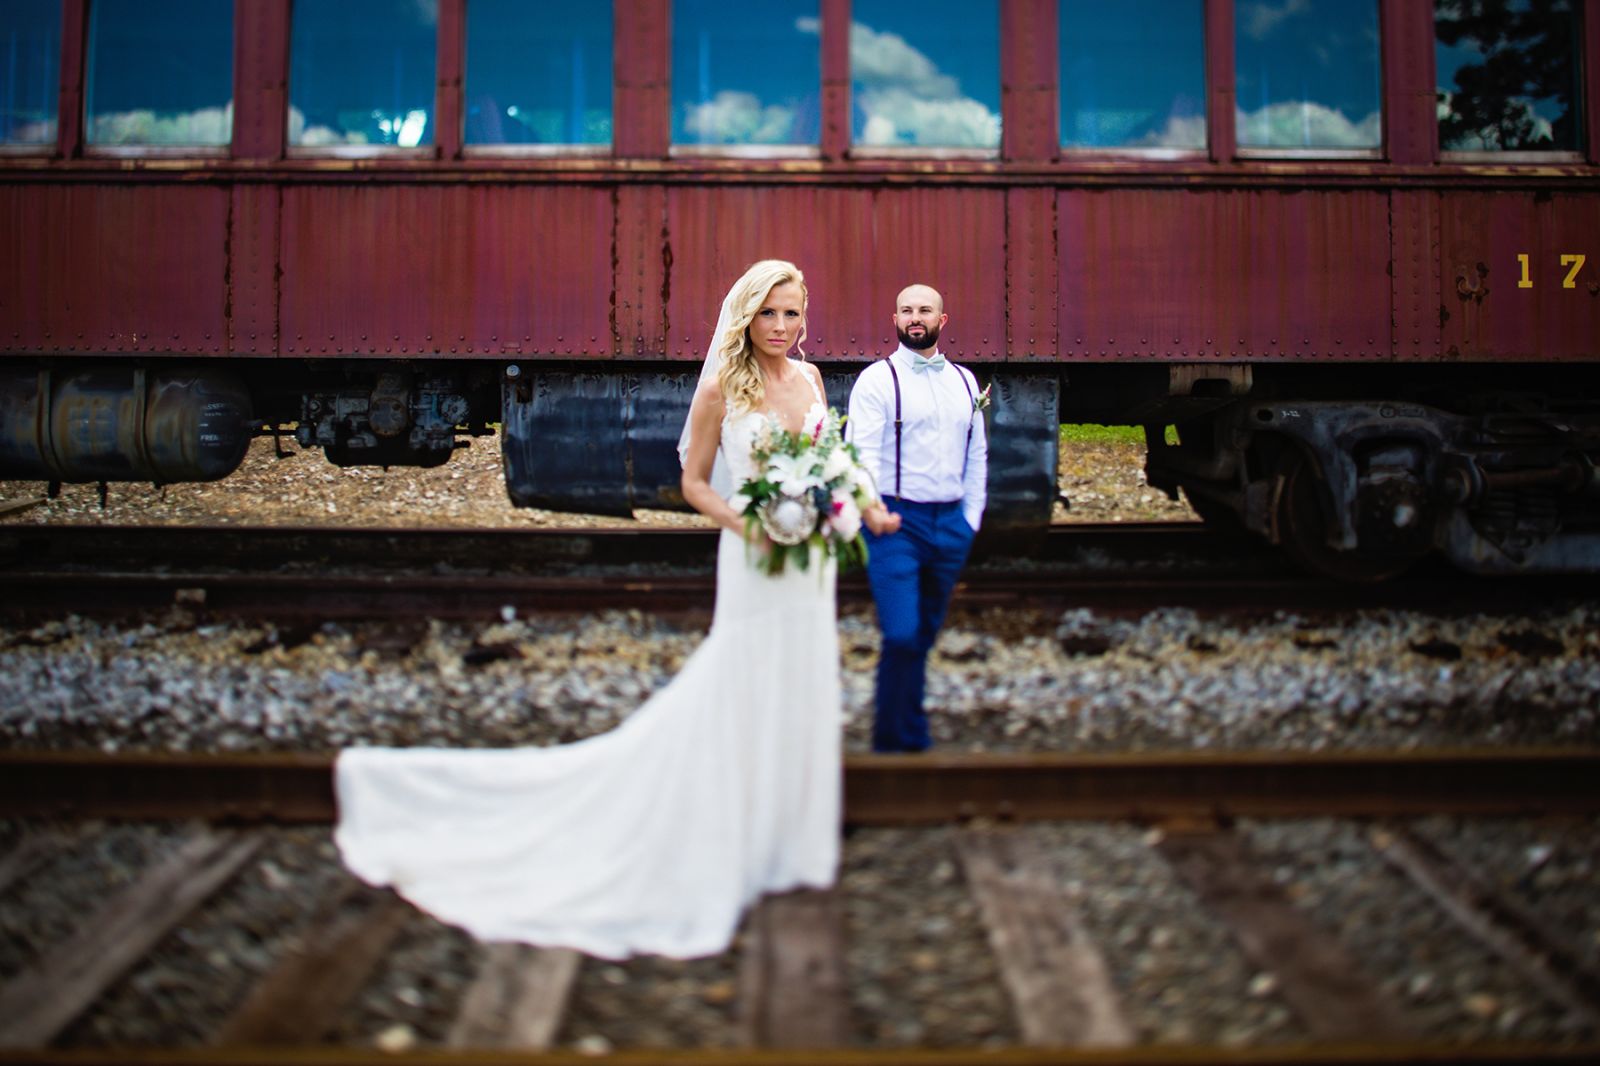 Everly at Railroad Wedding